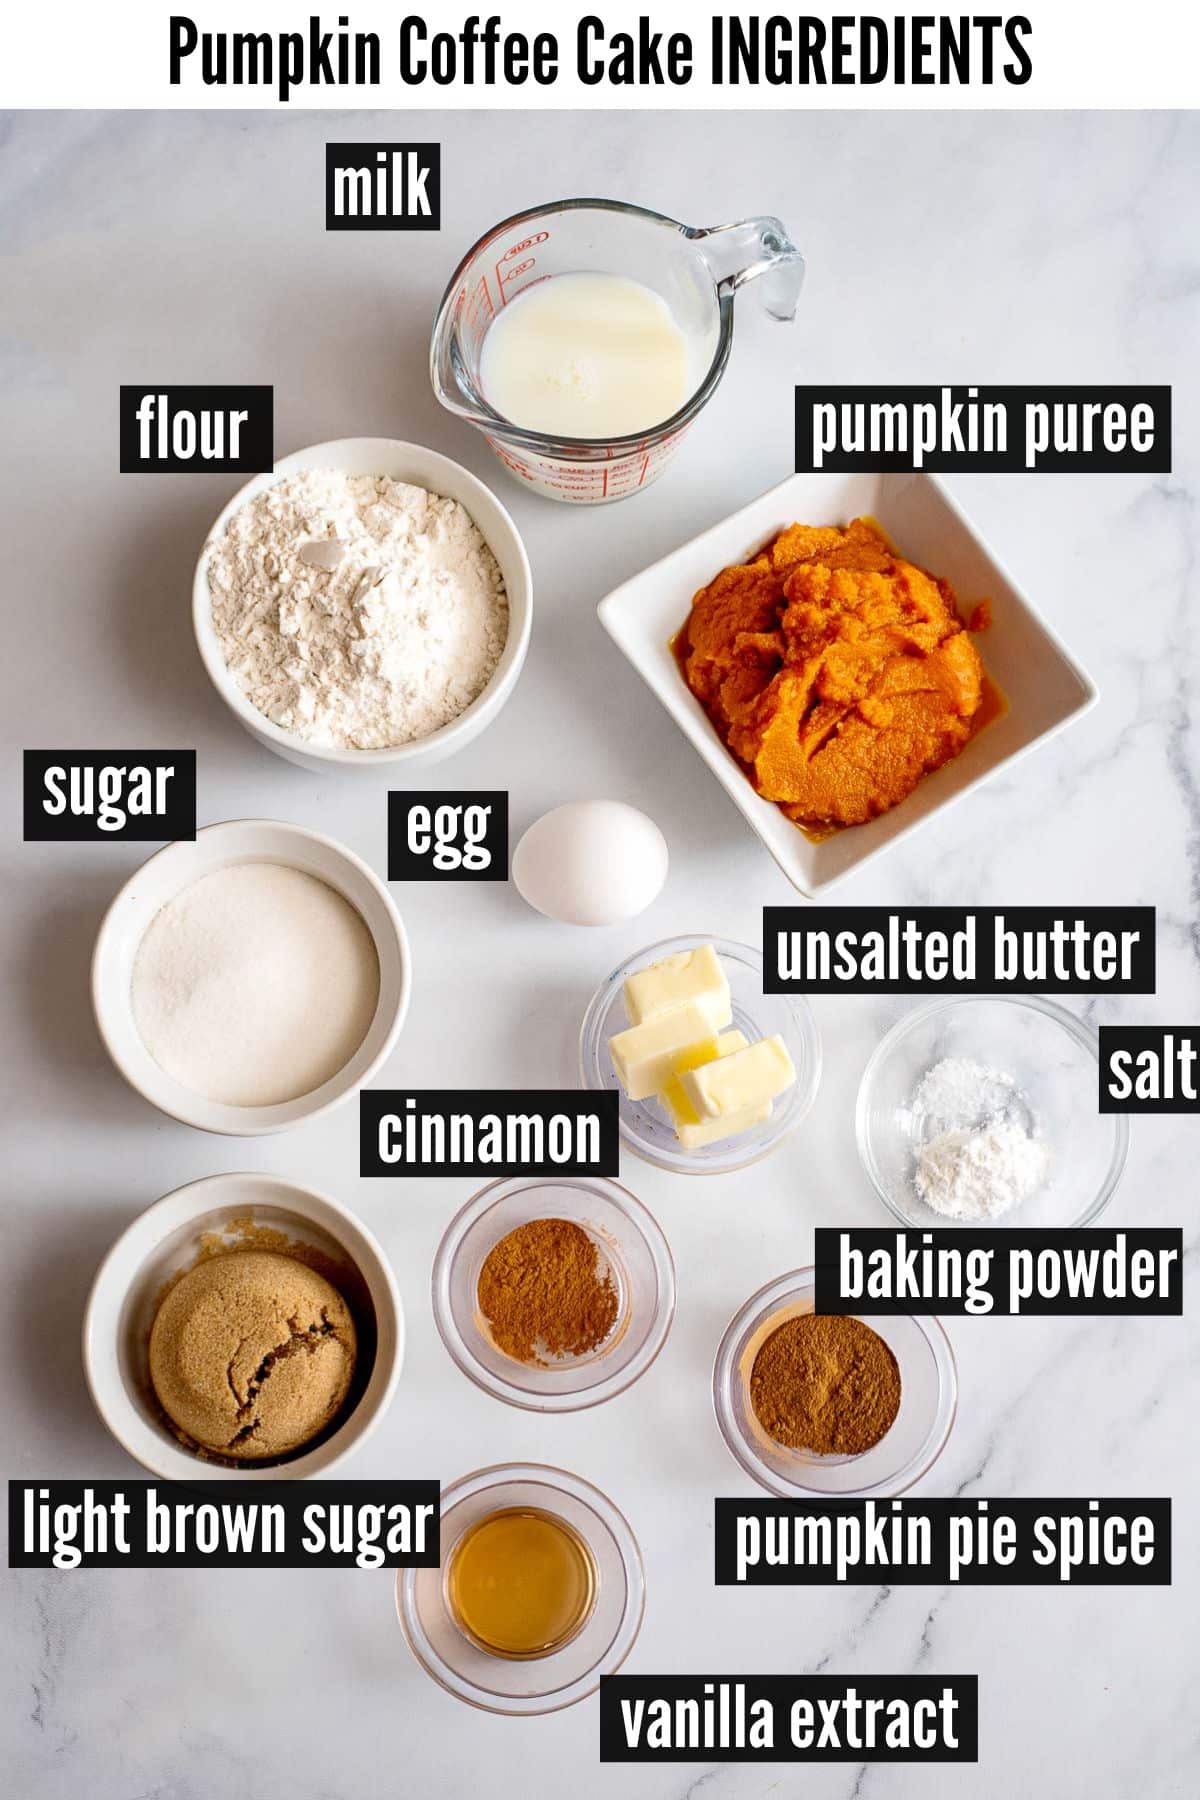 pumpkin coffee cake labelled ingredients.